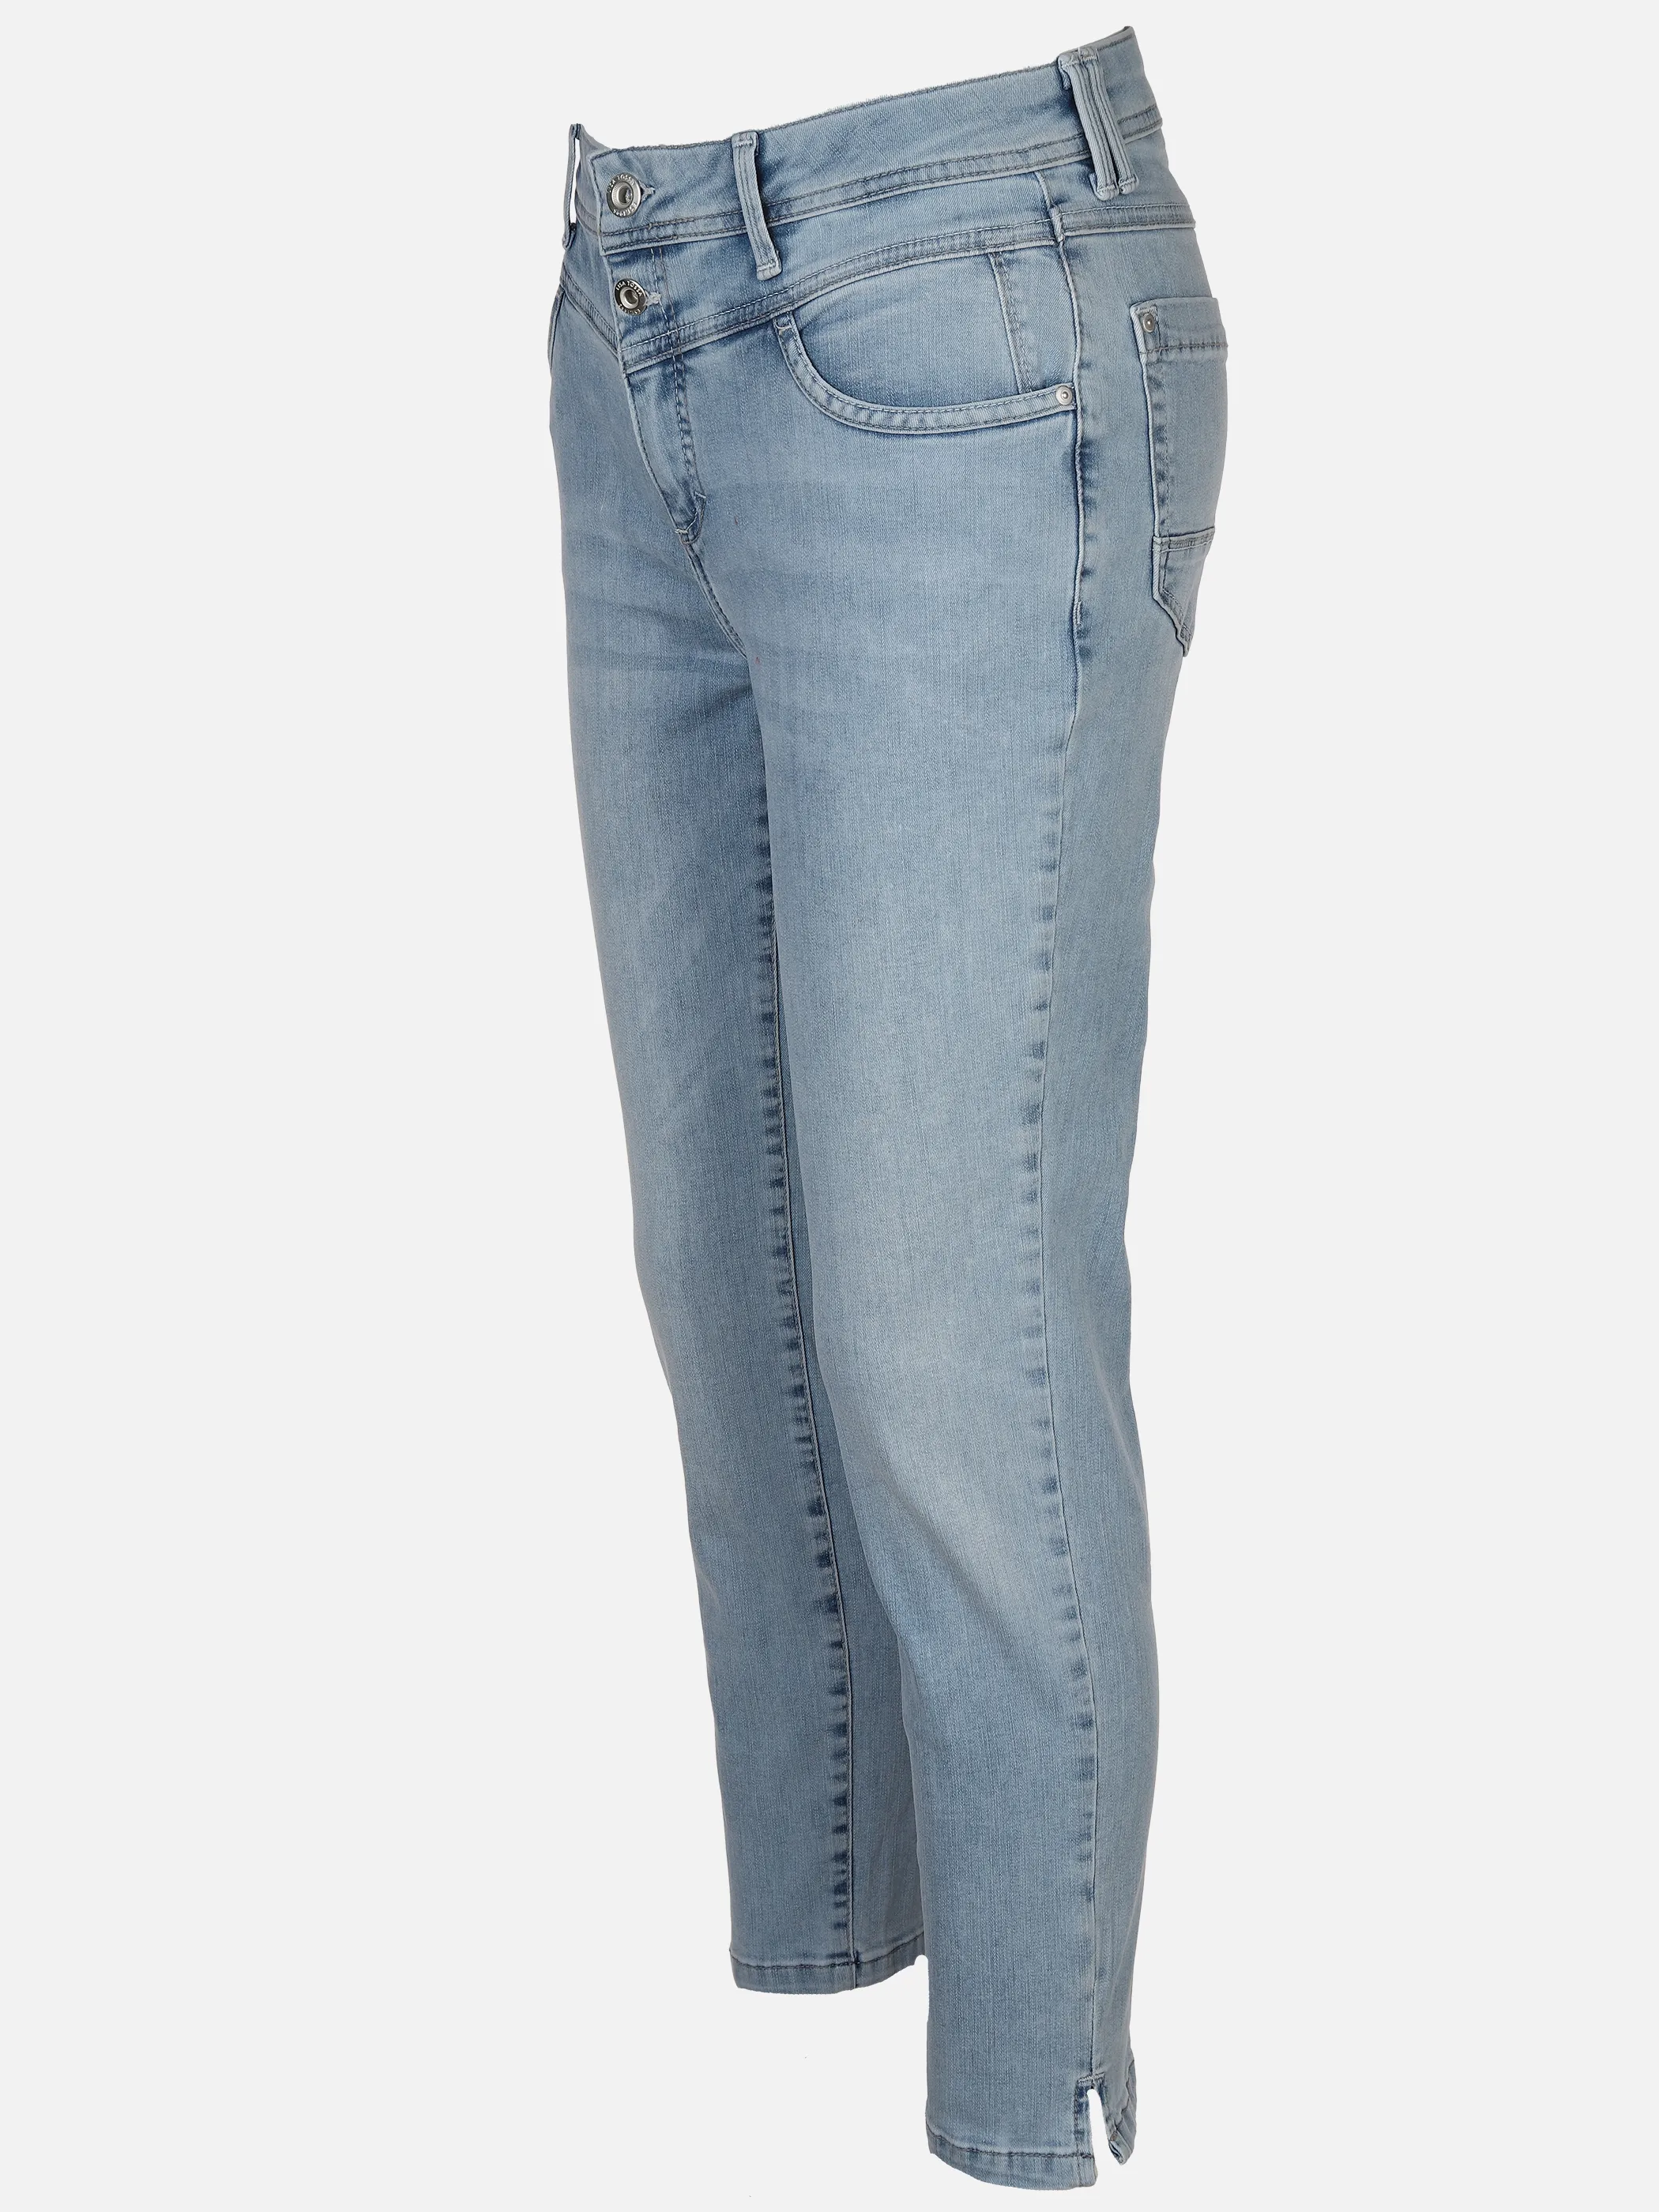 Lisa Tossa Da-Jeans in Sommerwaschung Blau 891617 LIGHTBLUE 3